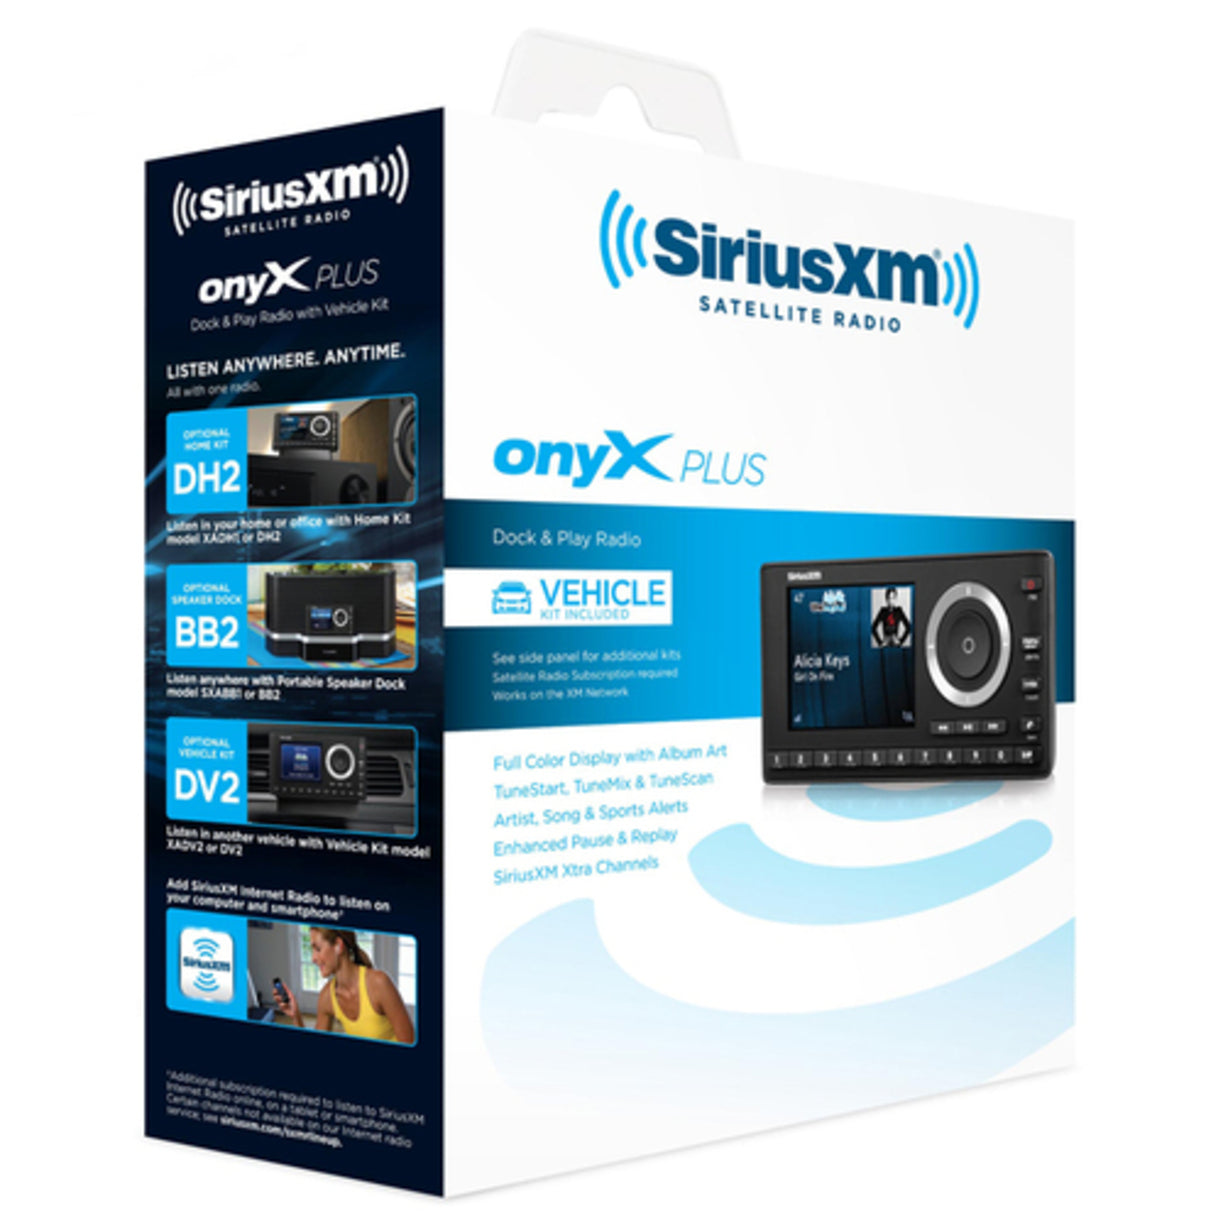 SiriusXM Onyx Plus with Vehicle Kit